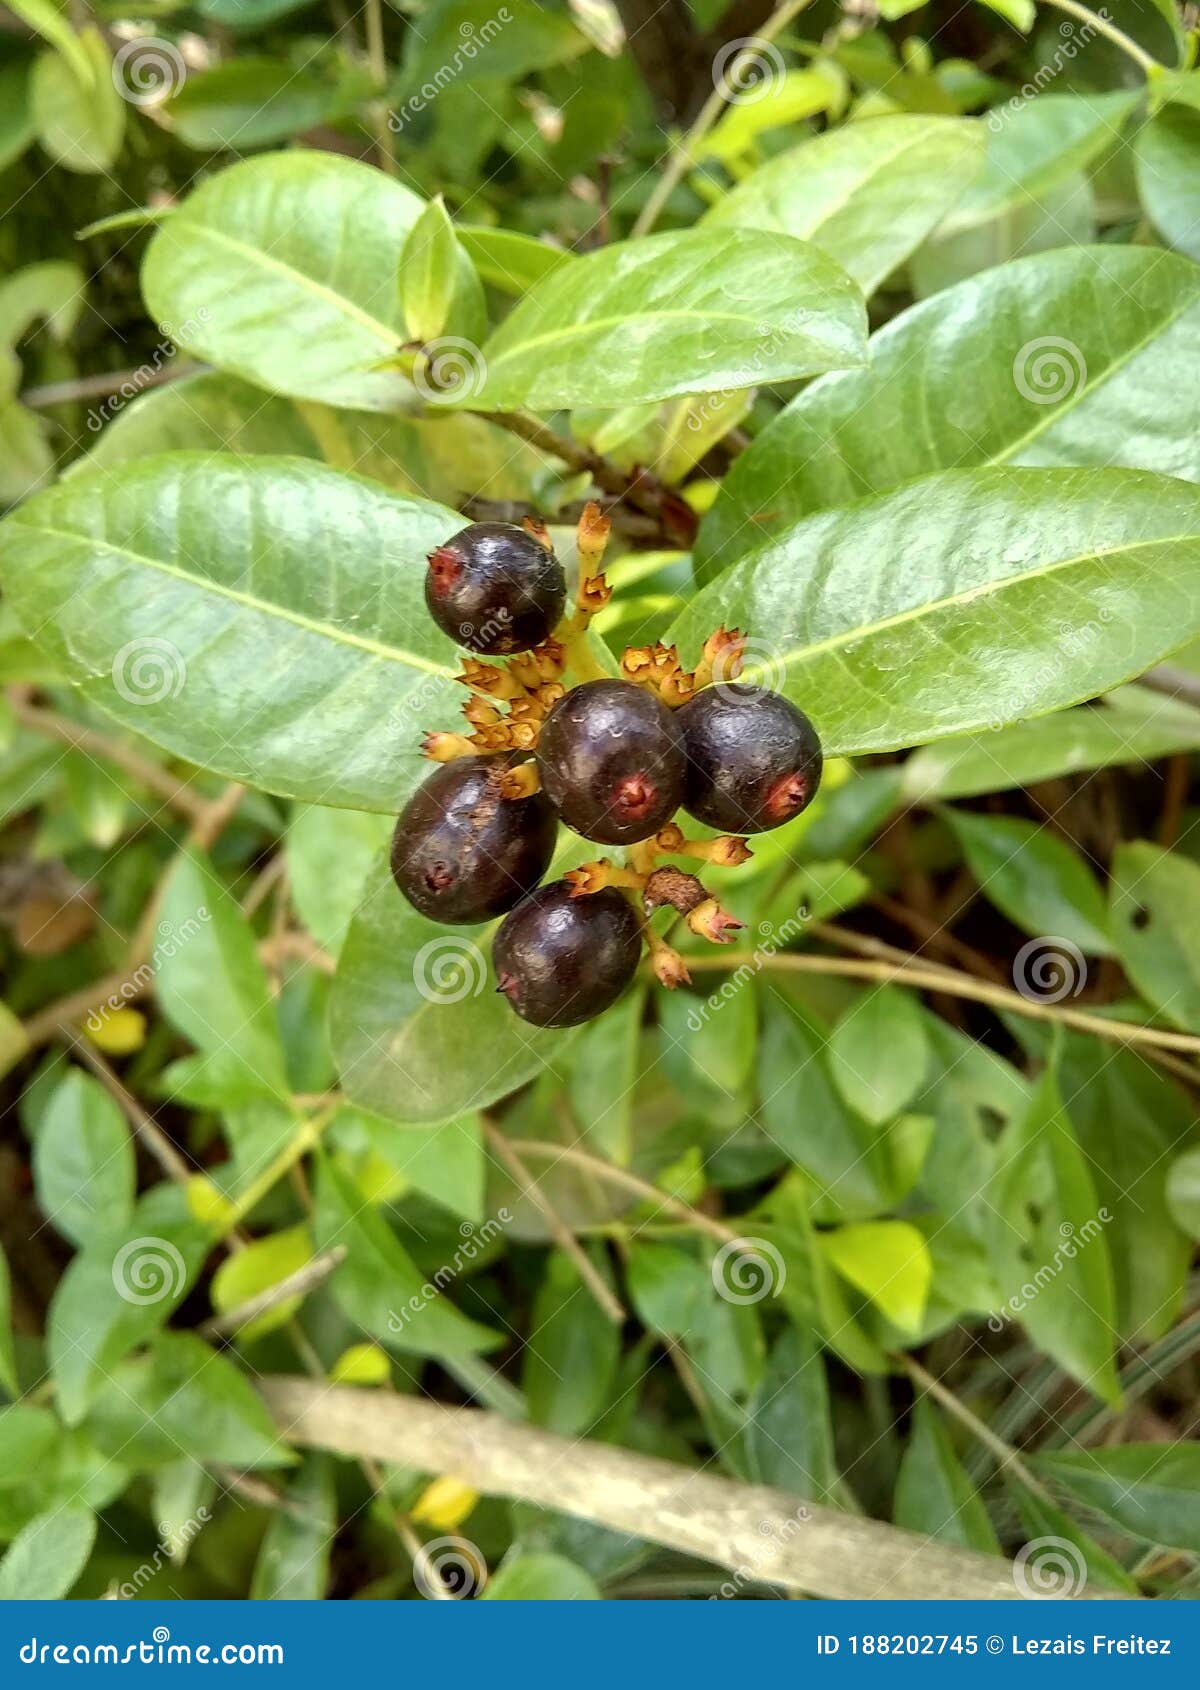 poisonous berries - bayas venenosas